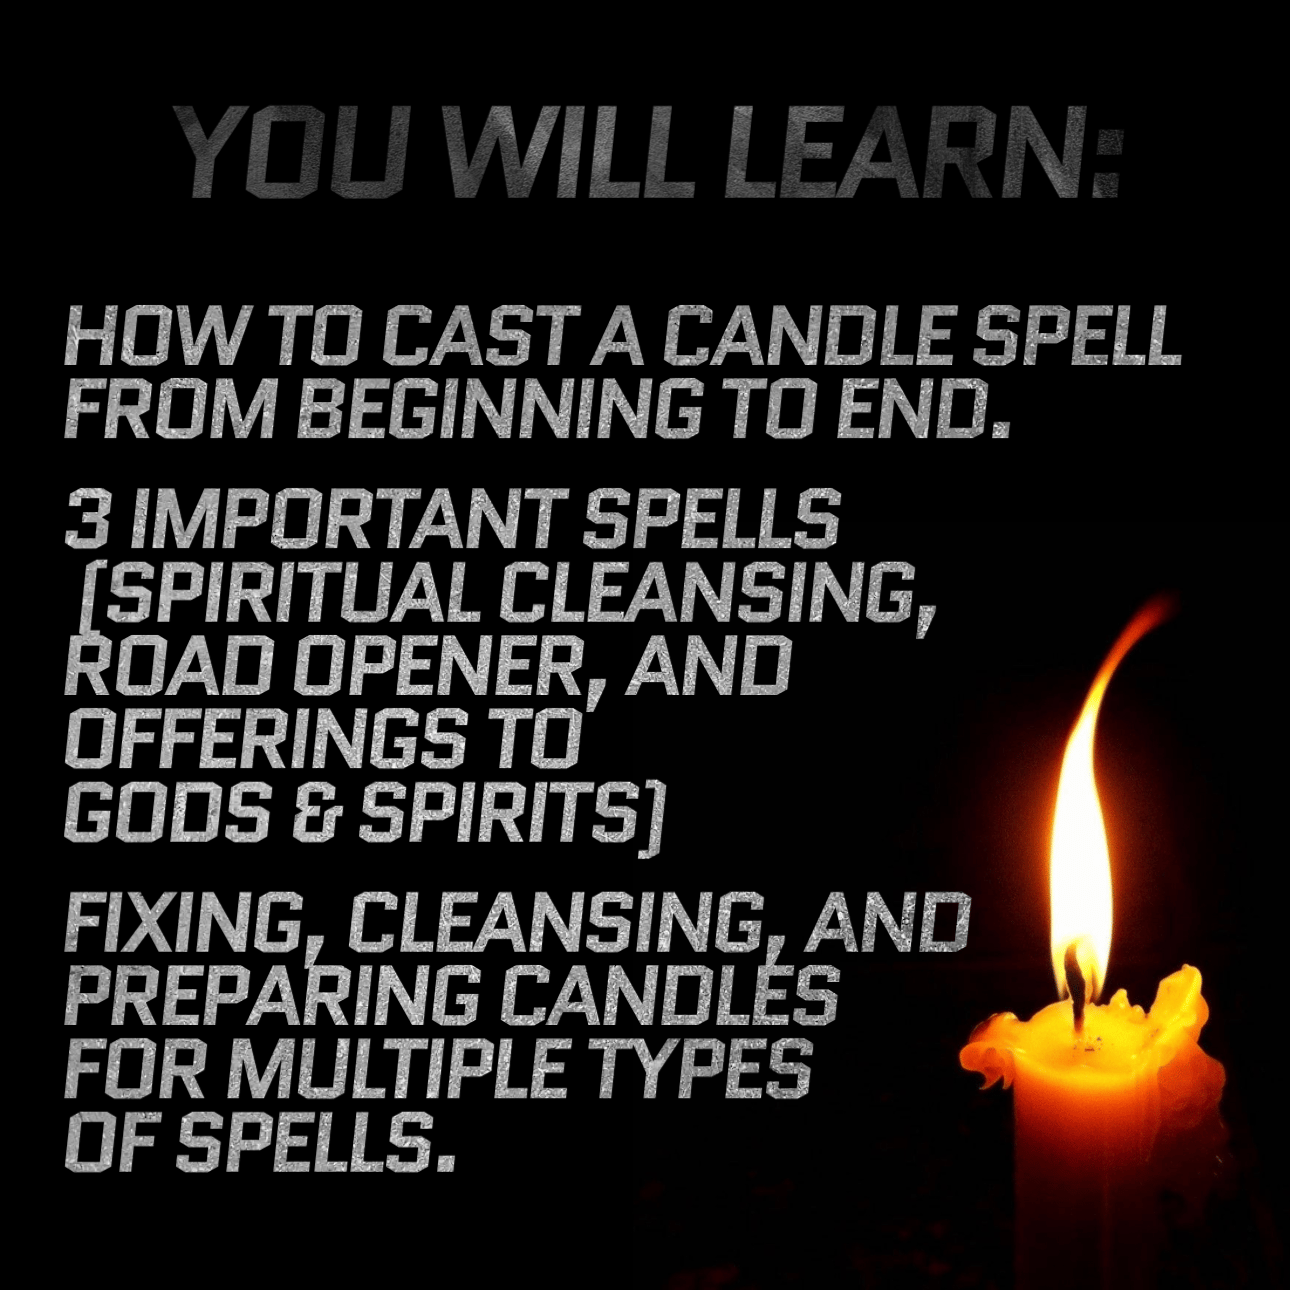 Image of Candle Magic 101